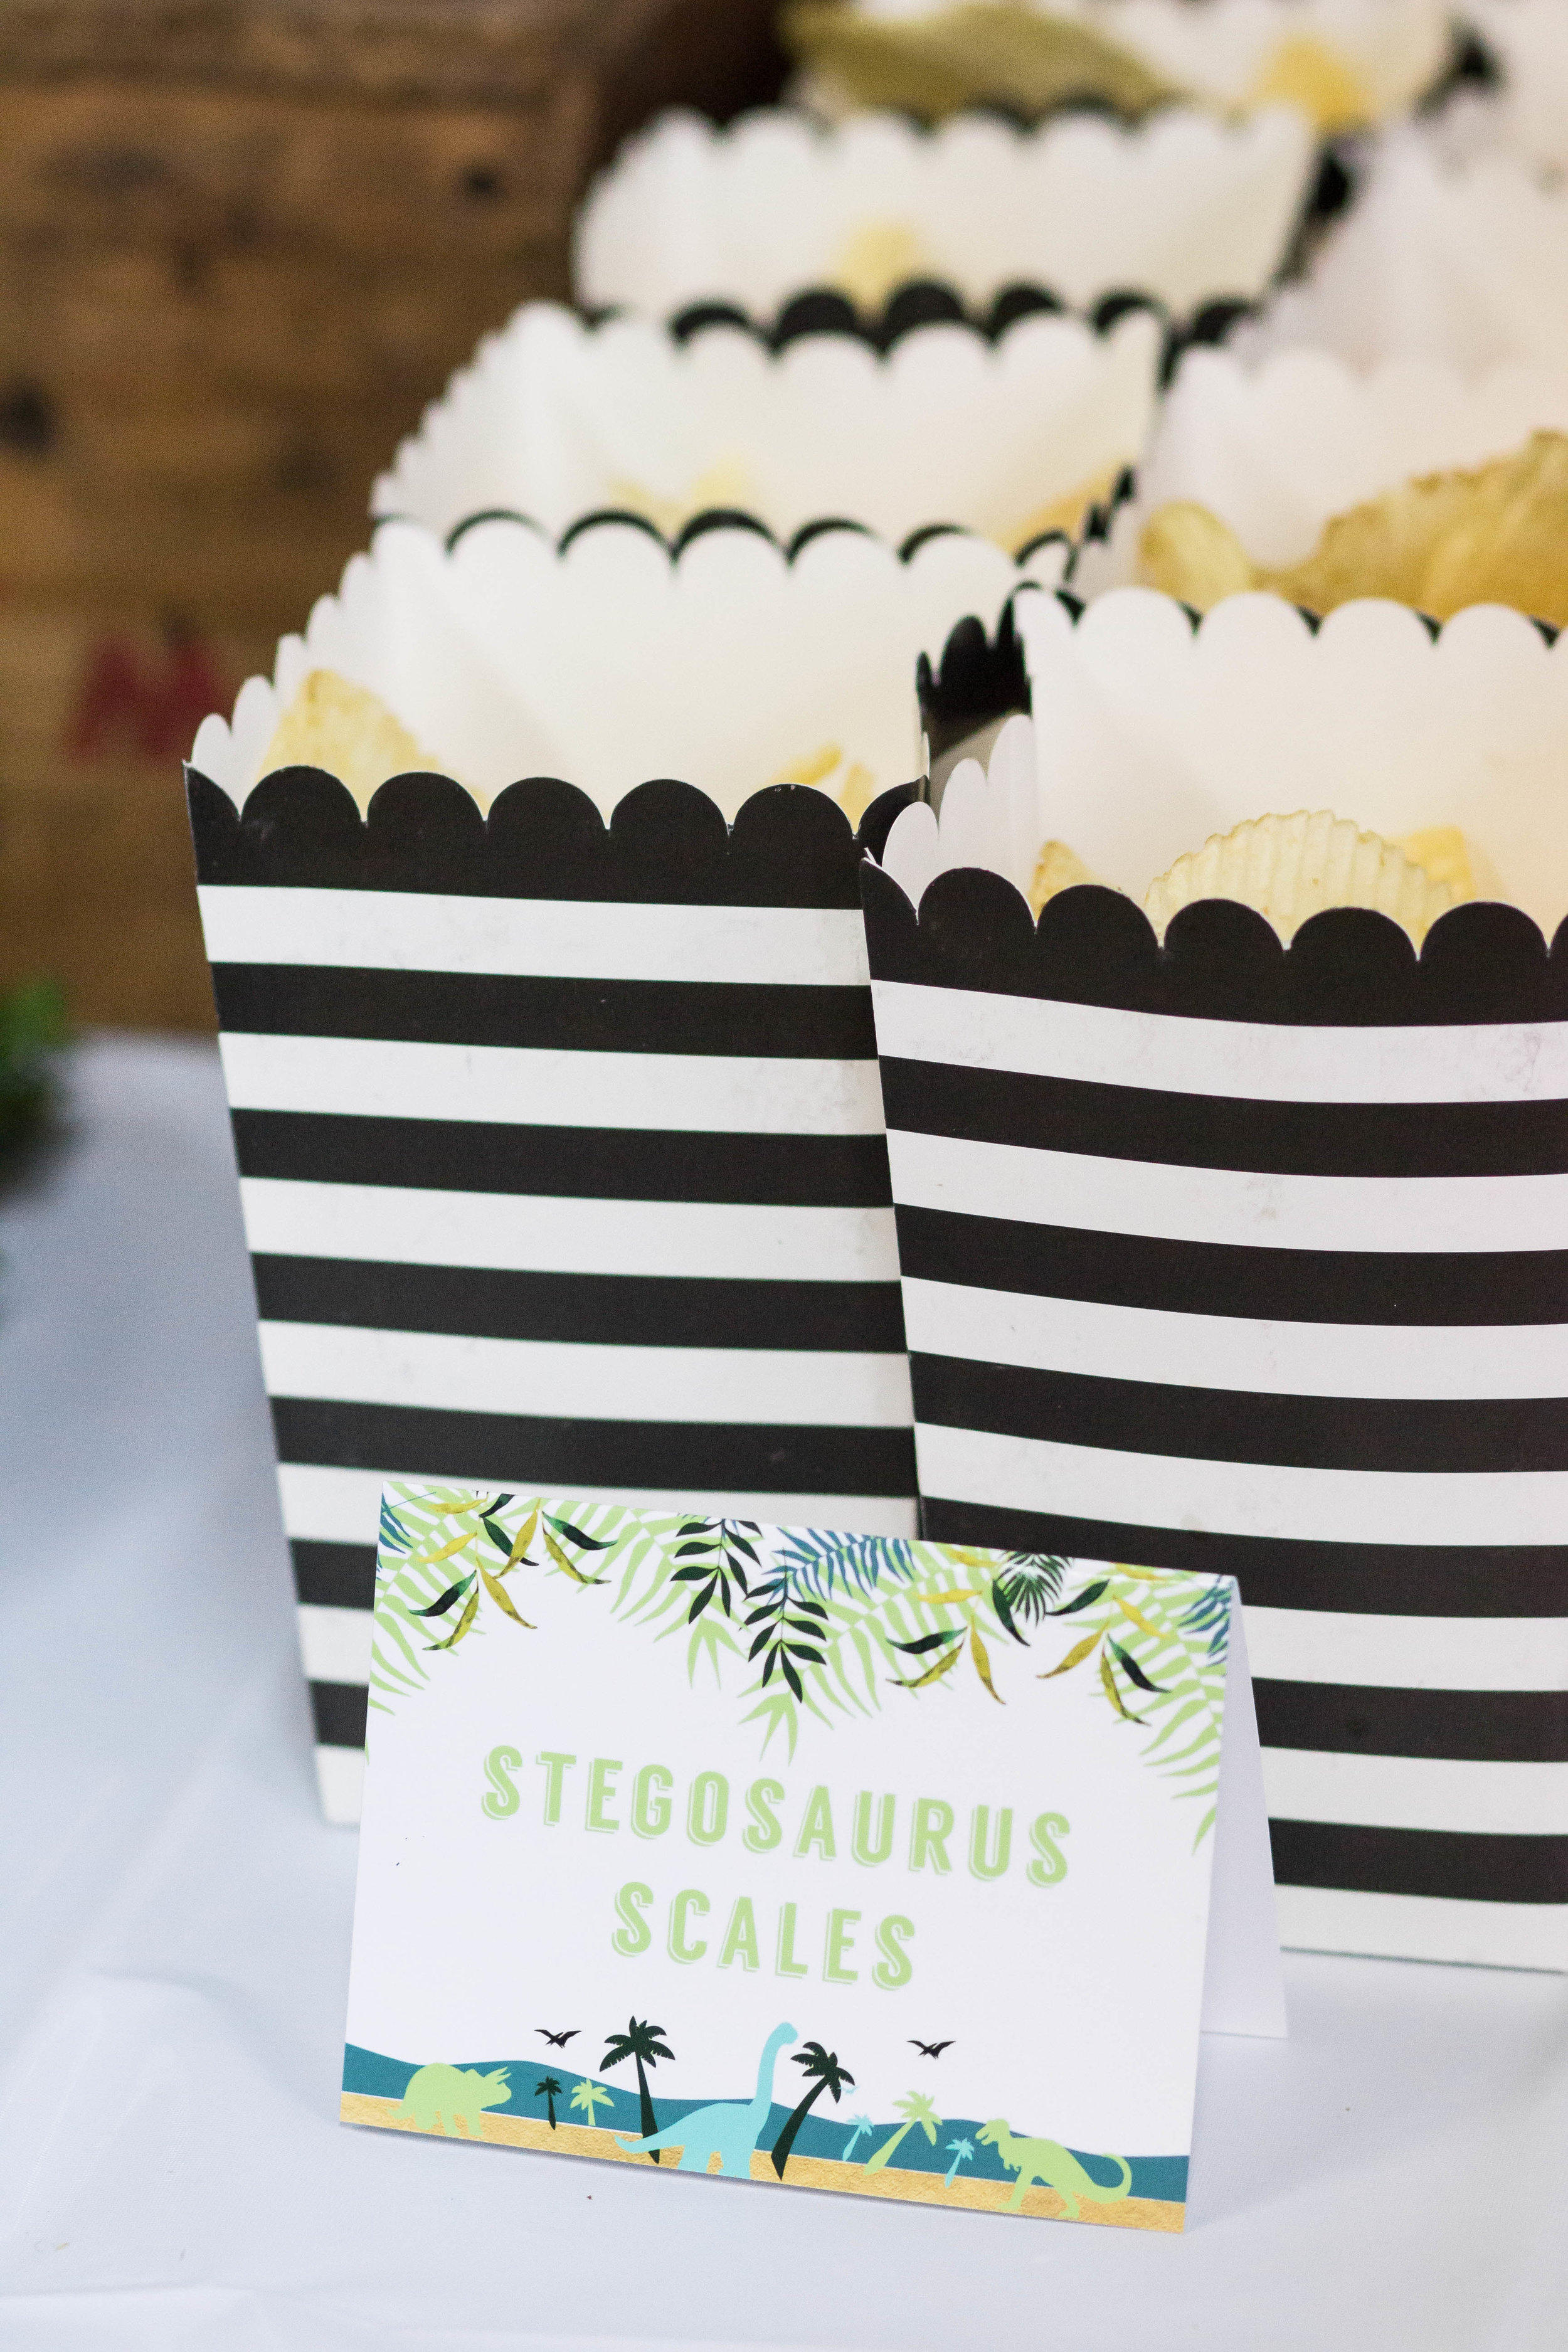 Stegosaurus Scales - Dinosaur Party food ideas from shopmkkm.com